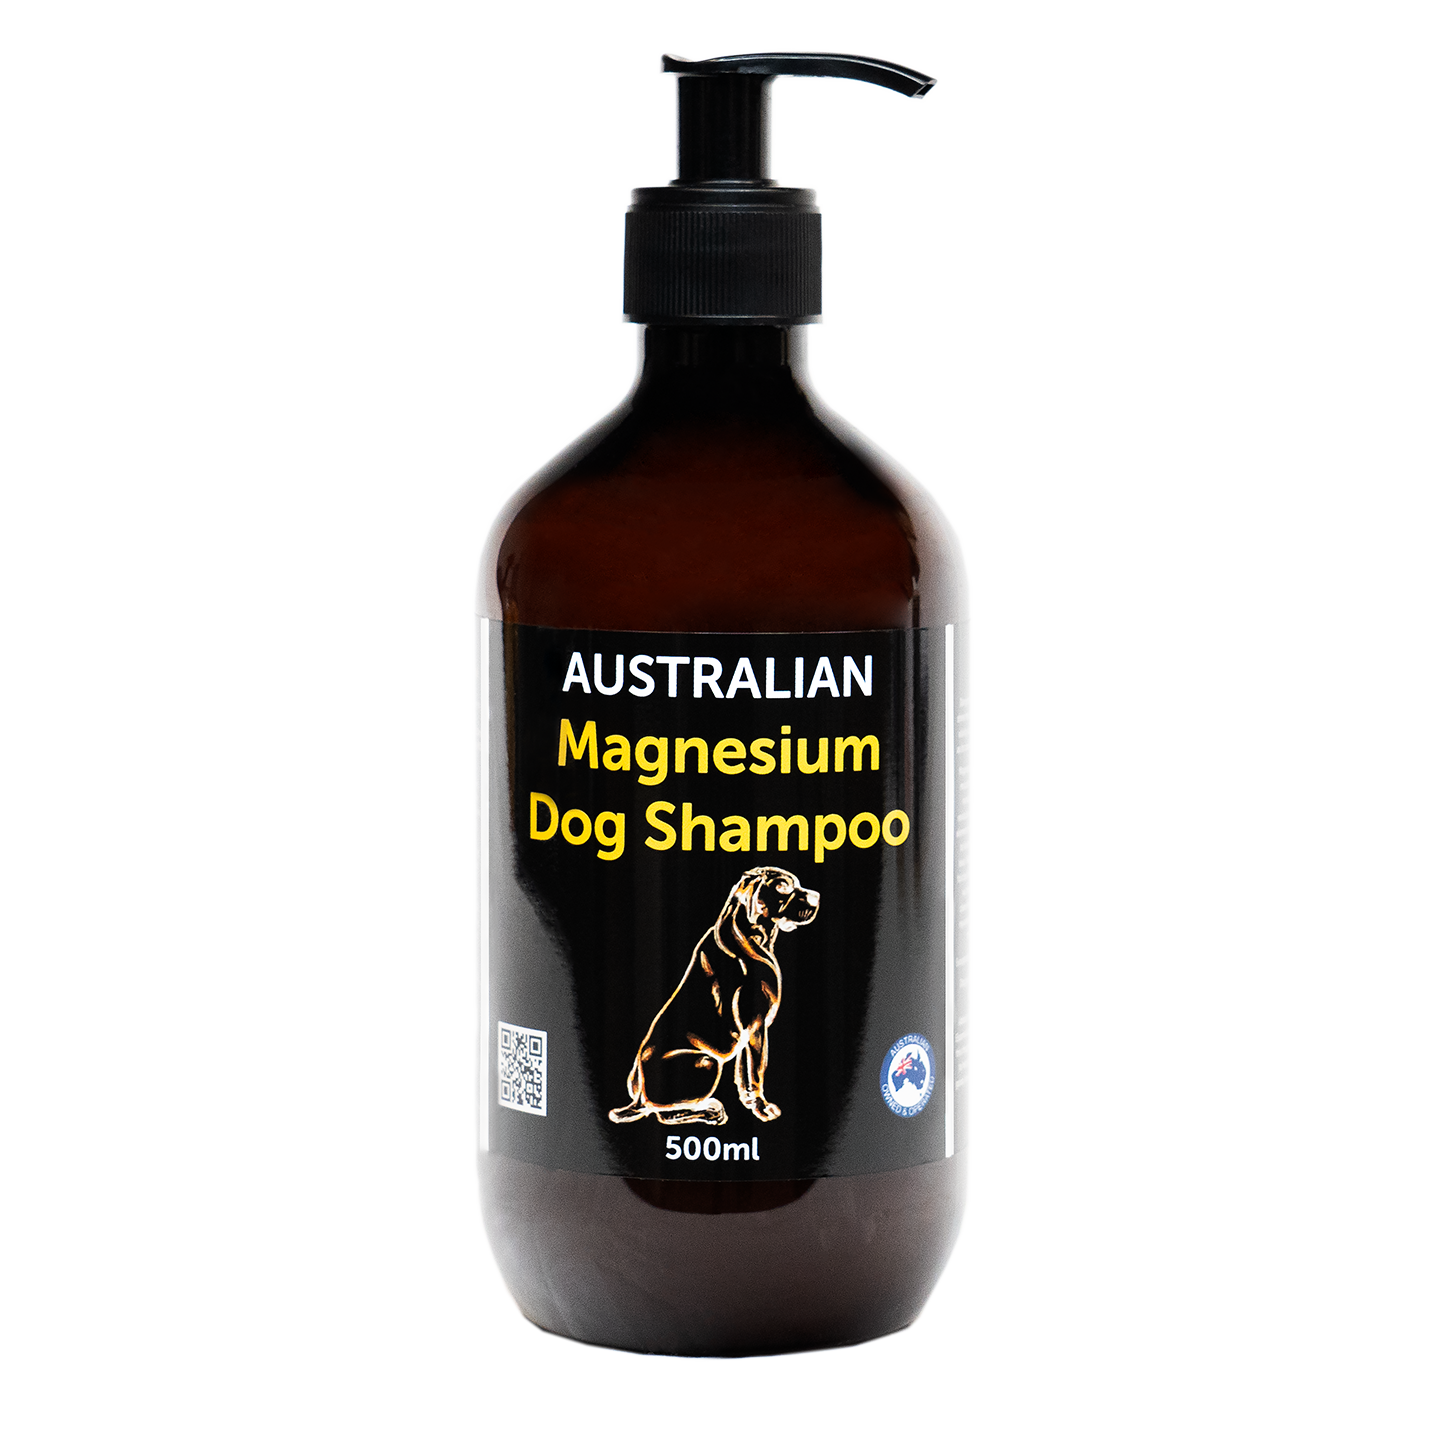 AUSTRALIAN MAGNESIUM DOG SHAMPOO 500ML